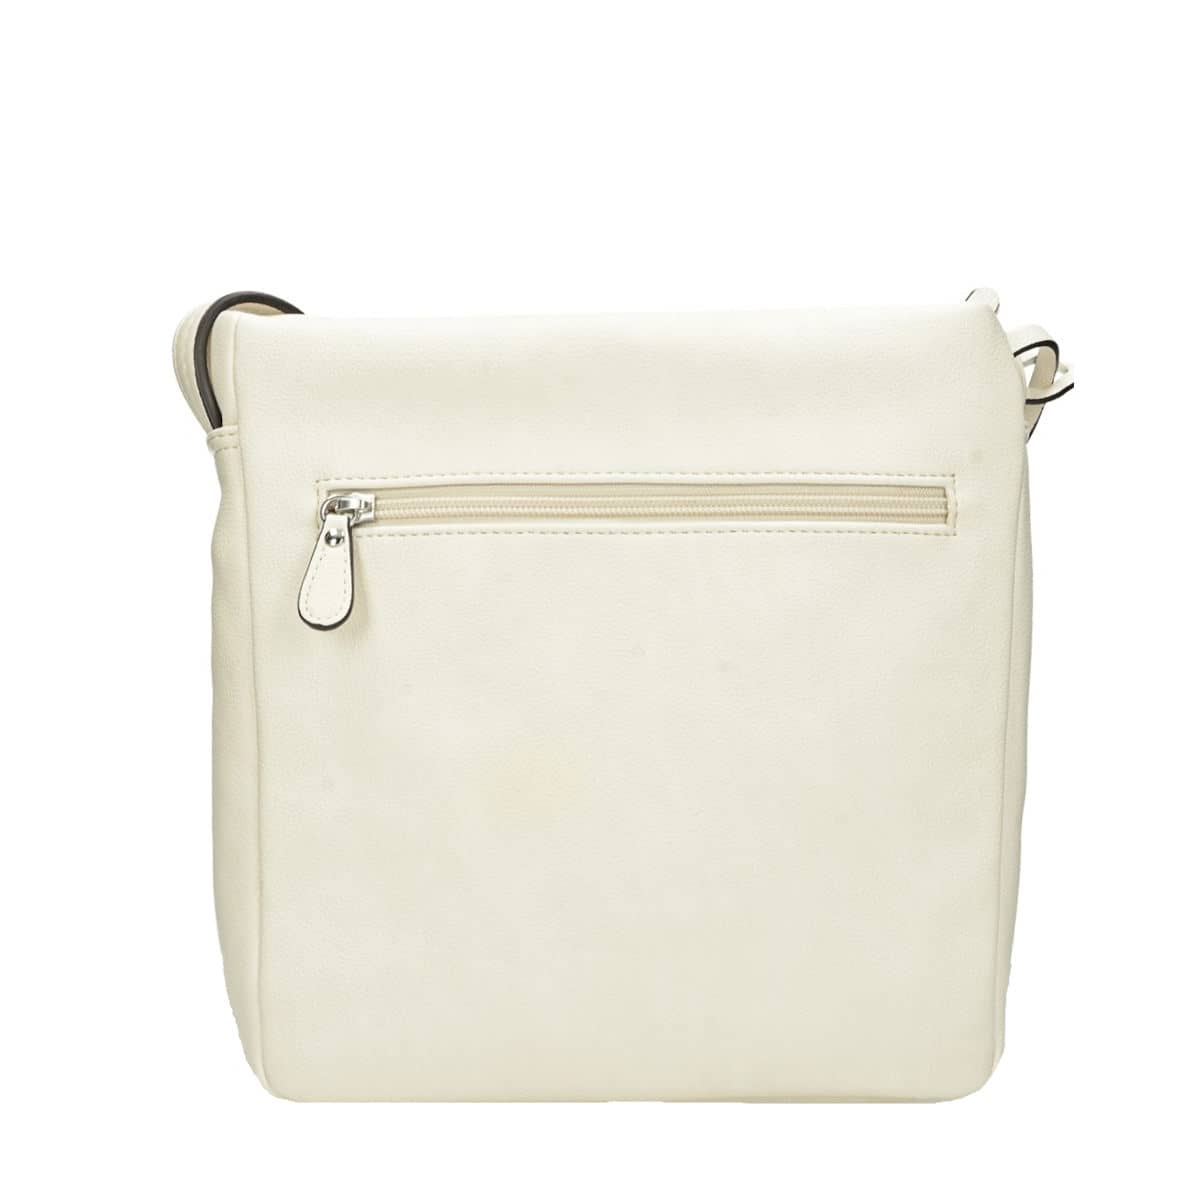 Picard women´s everyday handbag - white